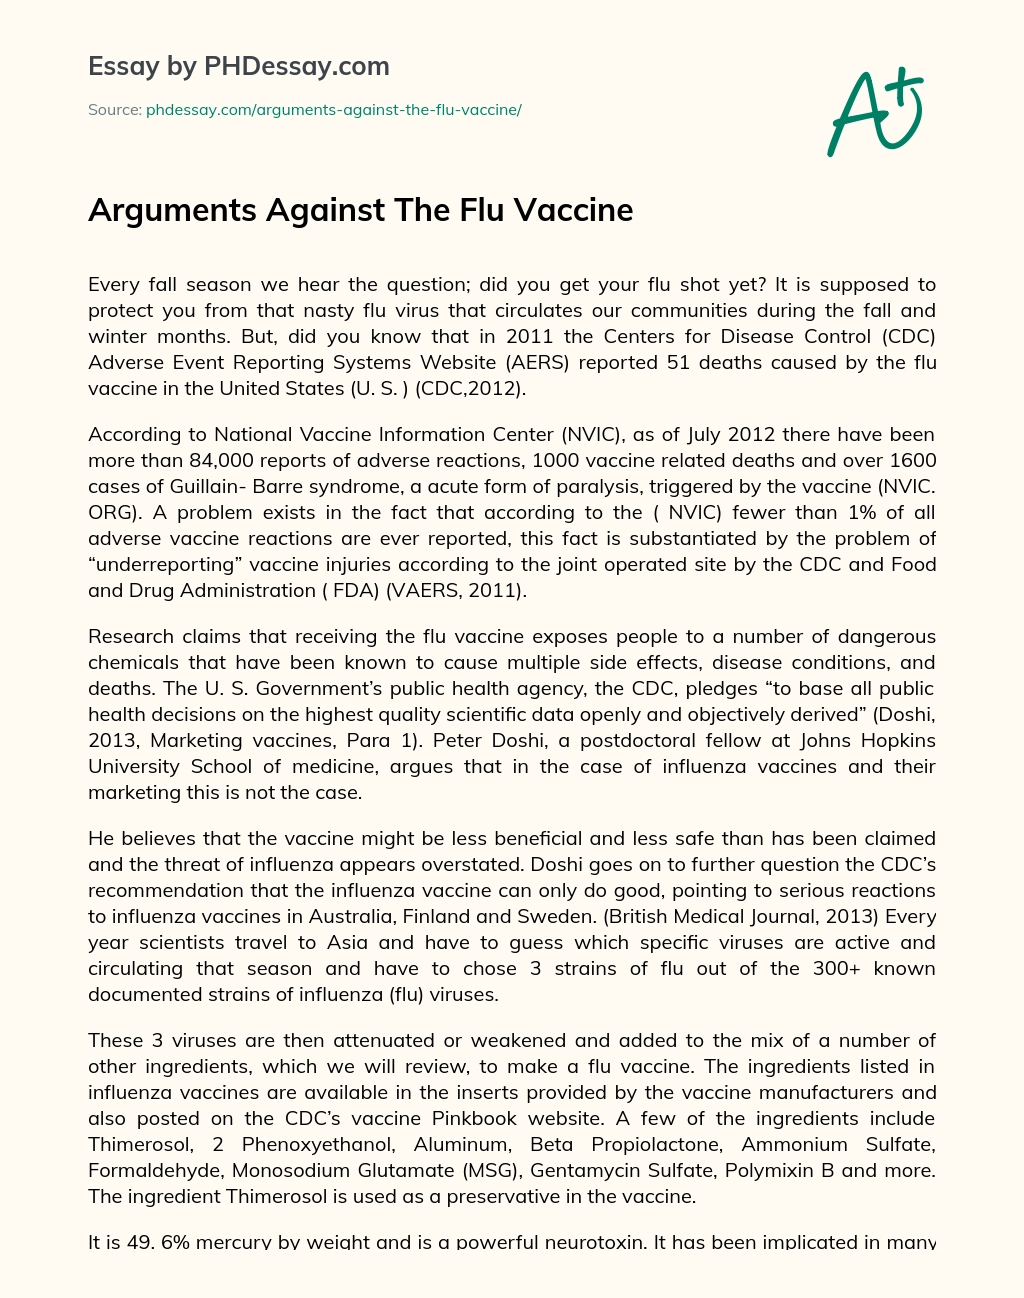 Arguments Against The Flu Vaccine essay